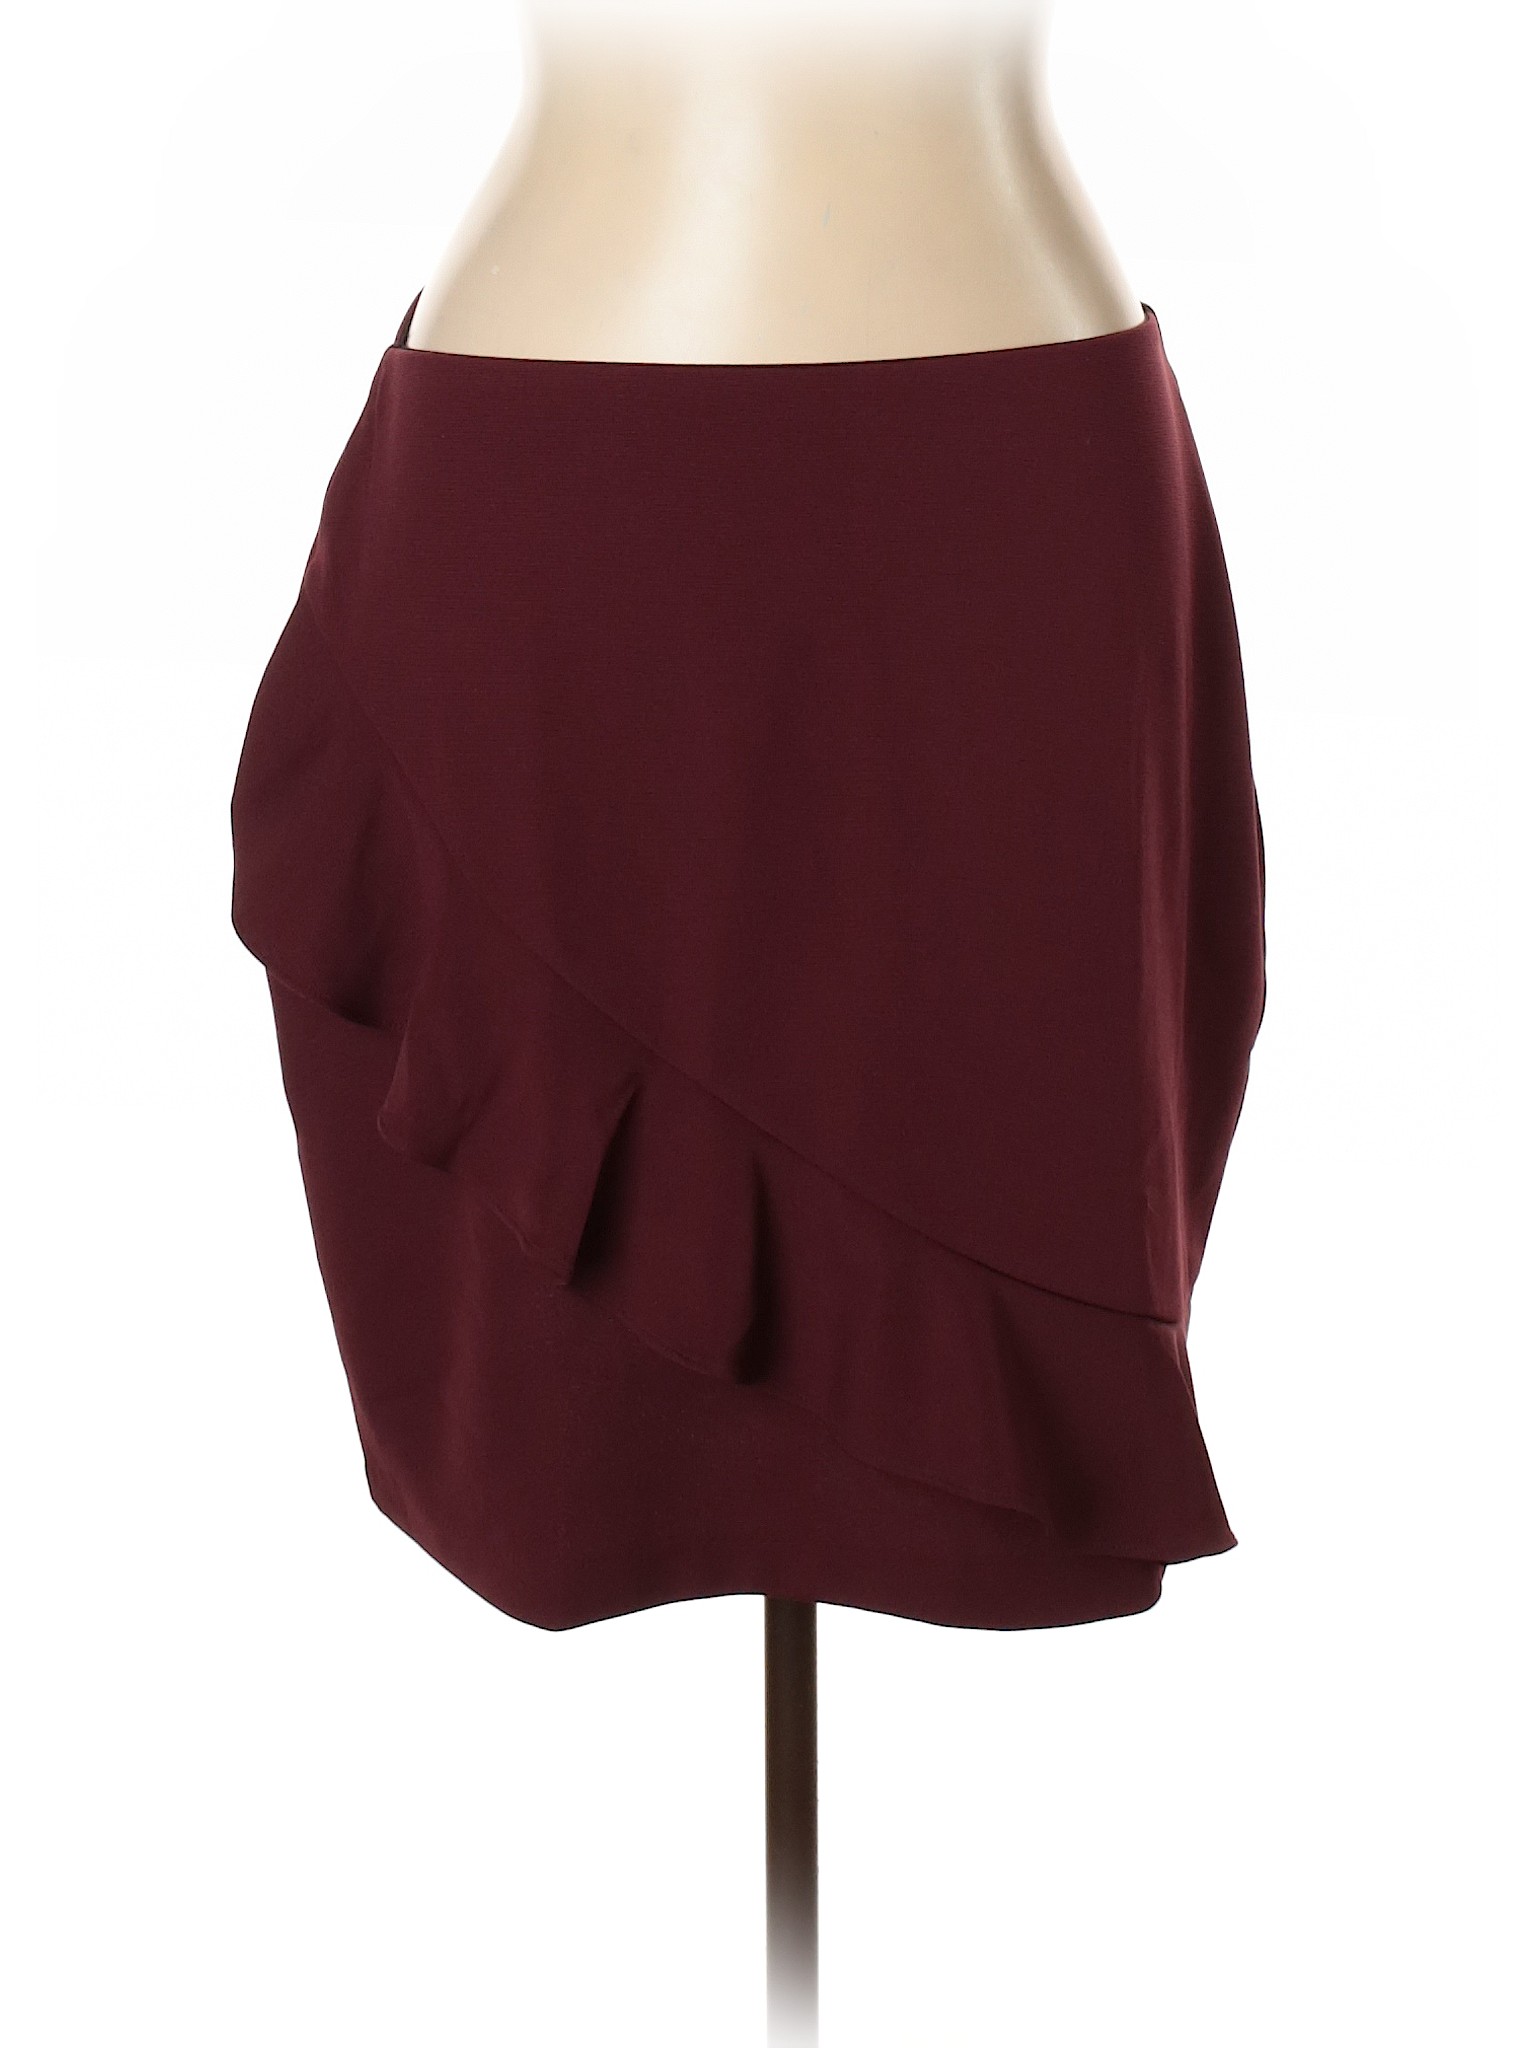 Apt. 9 Women Red Casual Skirt L | eBay